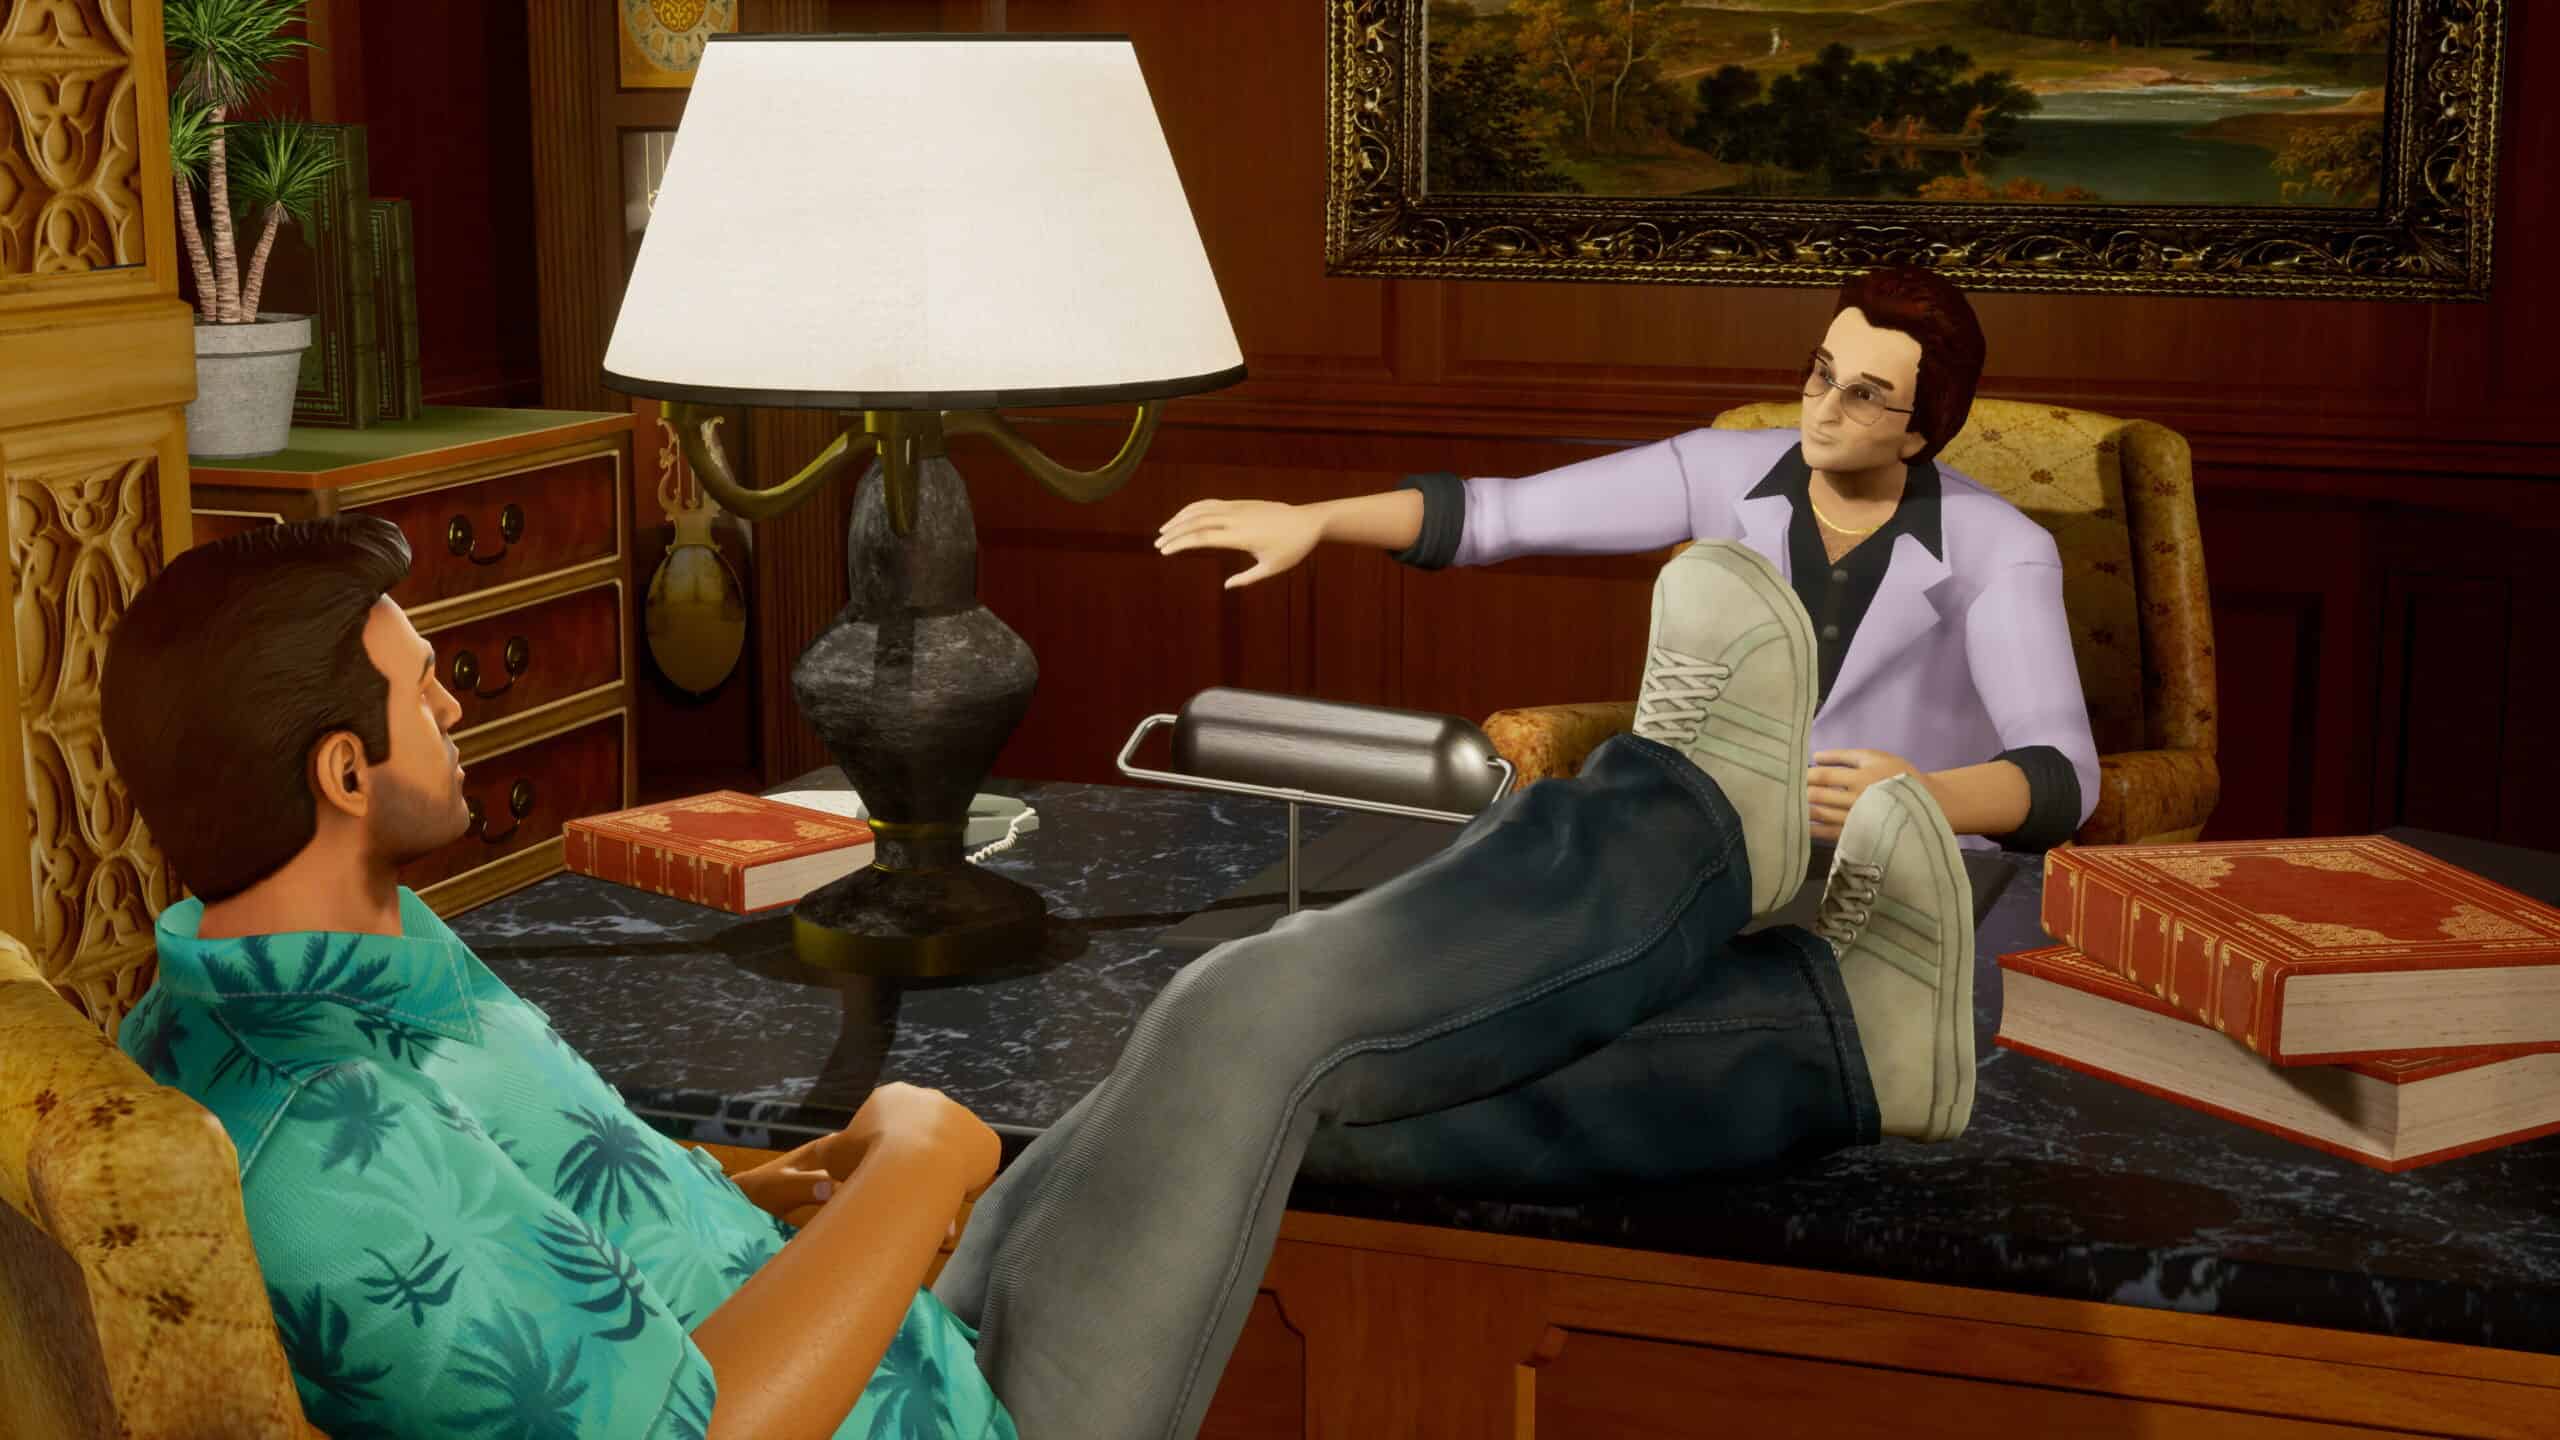 28 - Grand Theft Auto III - The Definitive Edition : r/steamachievements